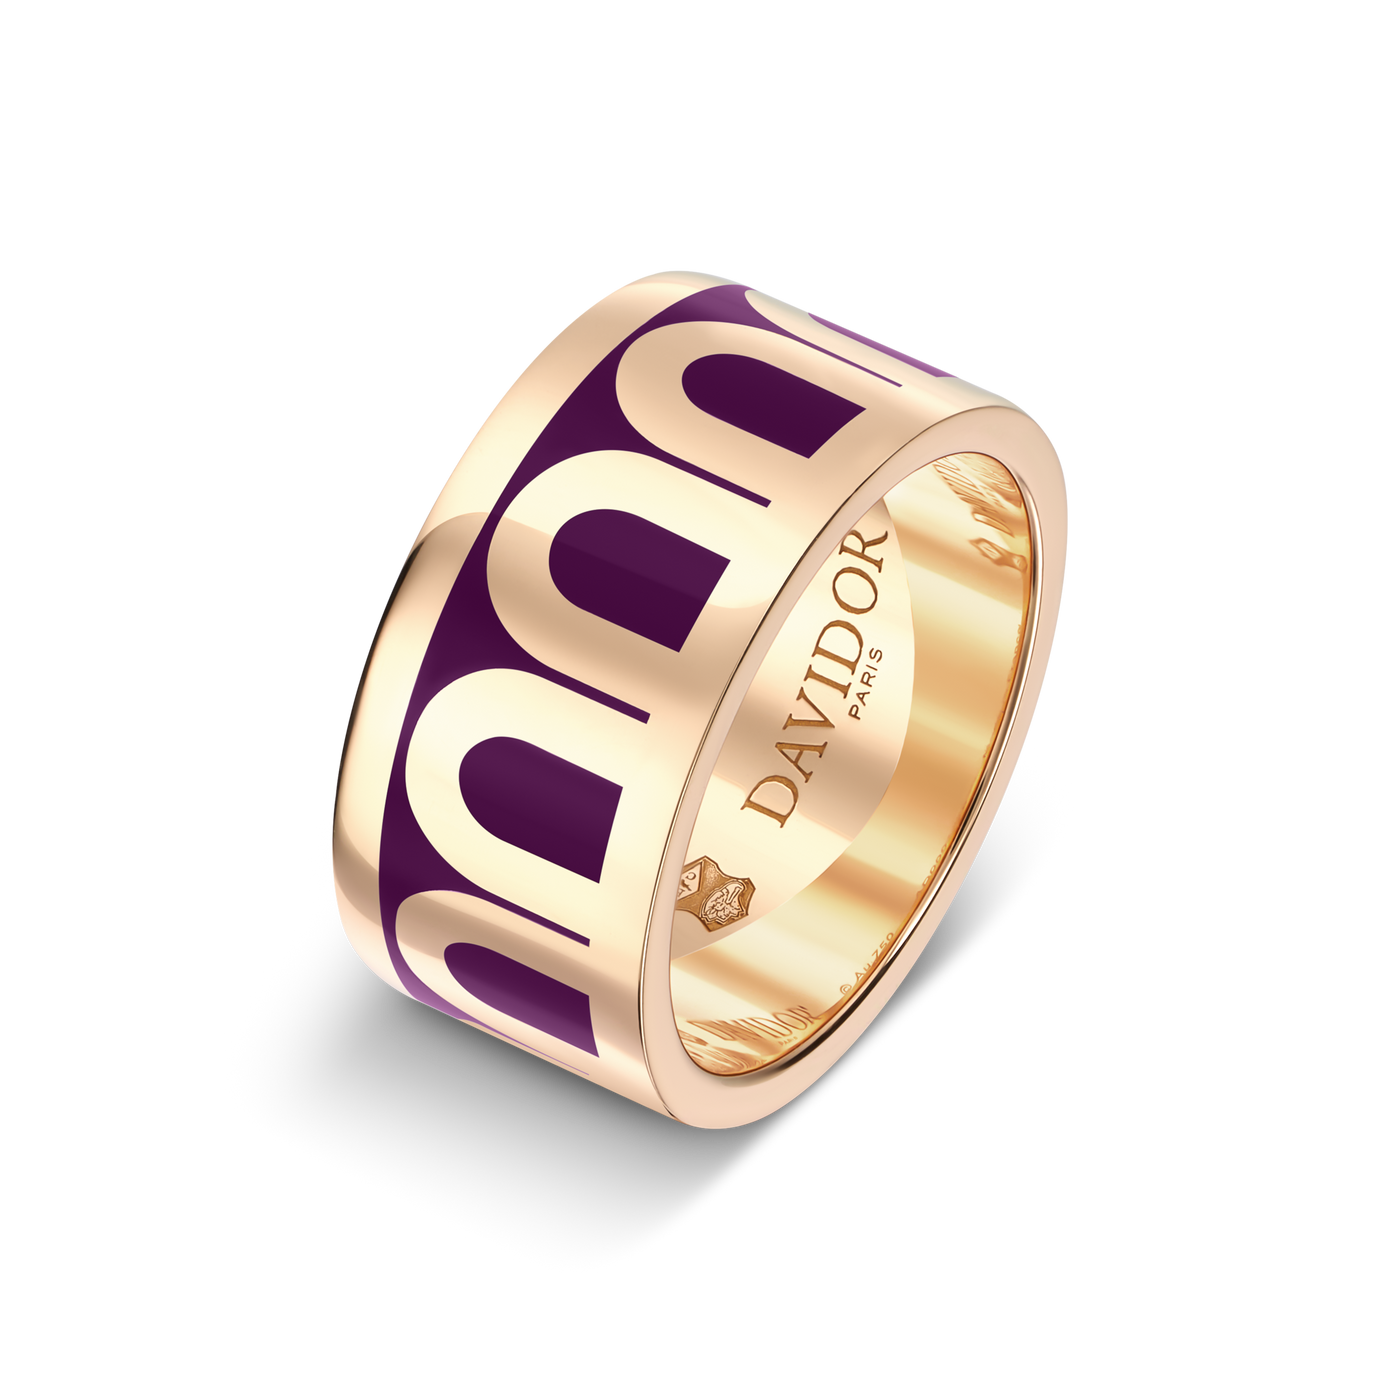 L'Arc de DAVIDOR Ring GM, 18k Rose Gold with Aubergine Lacquered Ceramic - DAVIDOR